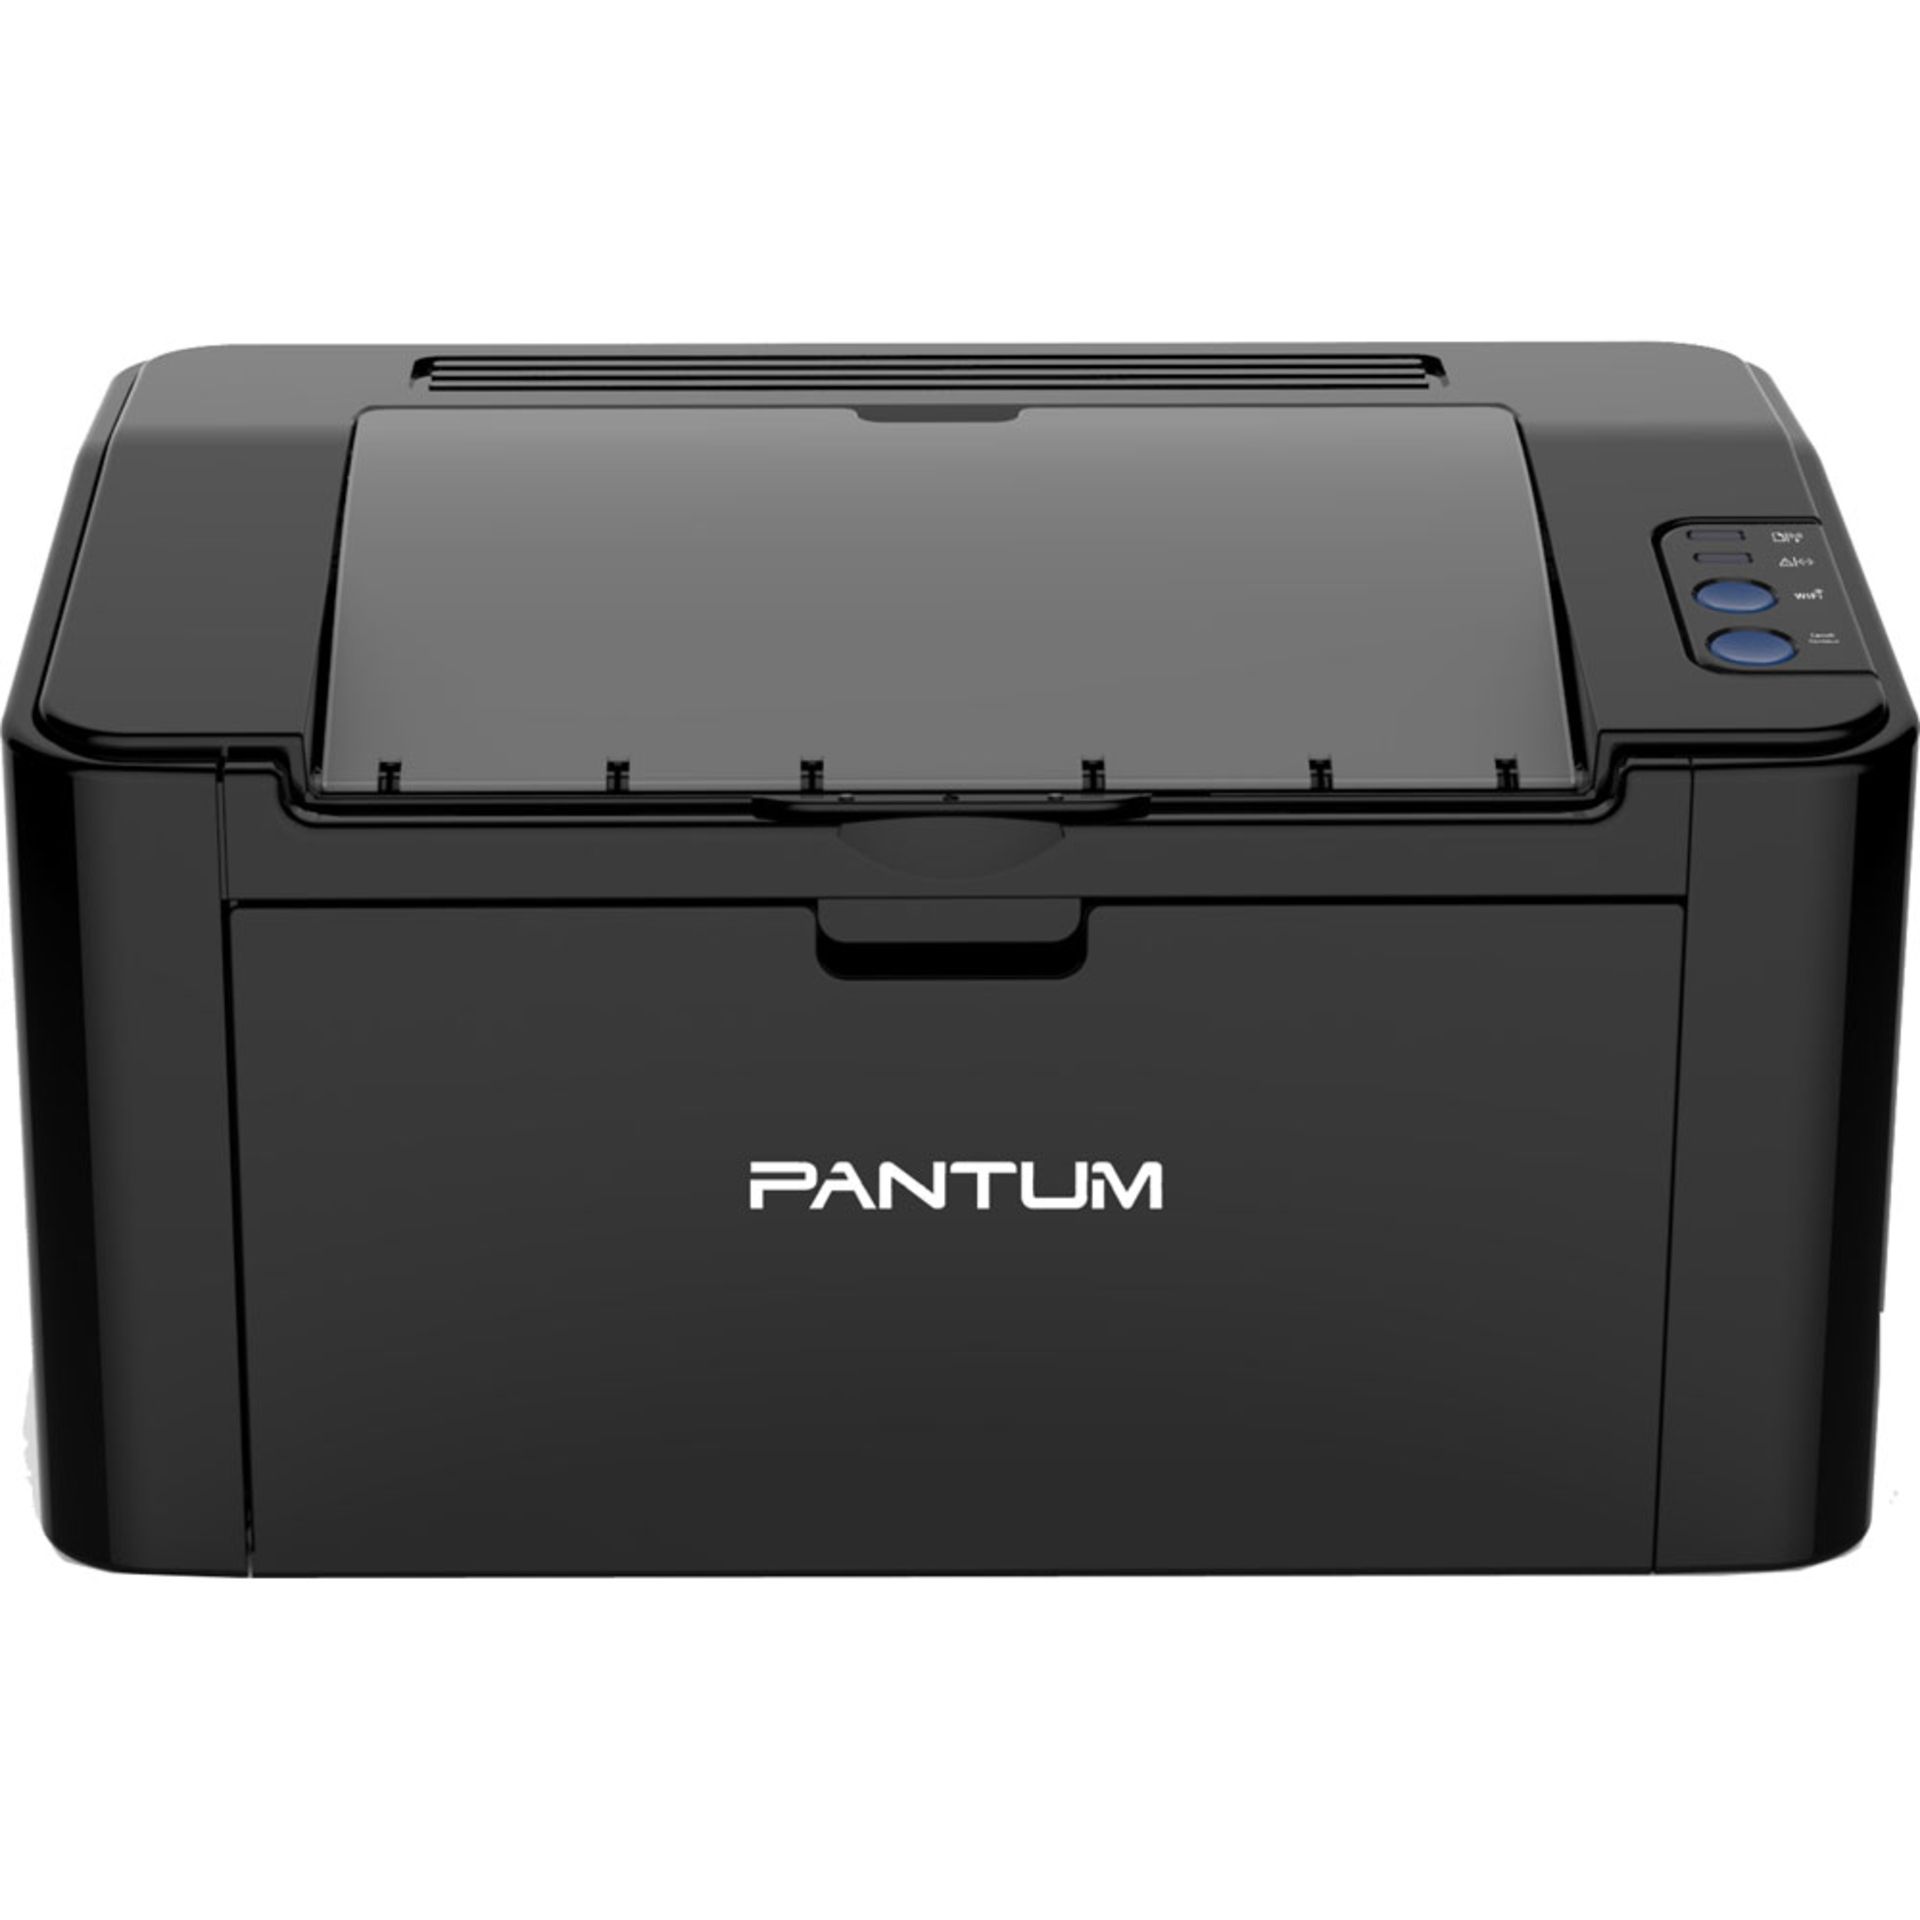 V *TRADE QTY* Brand New Pantum Laser Printer 30PPM 1200x600DPI Mono - Black - ISP £174.19 (Amazon) X